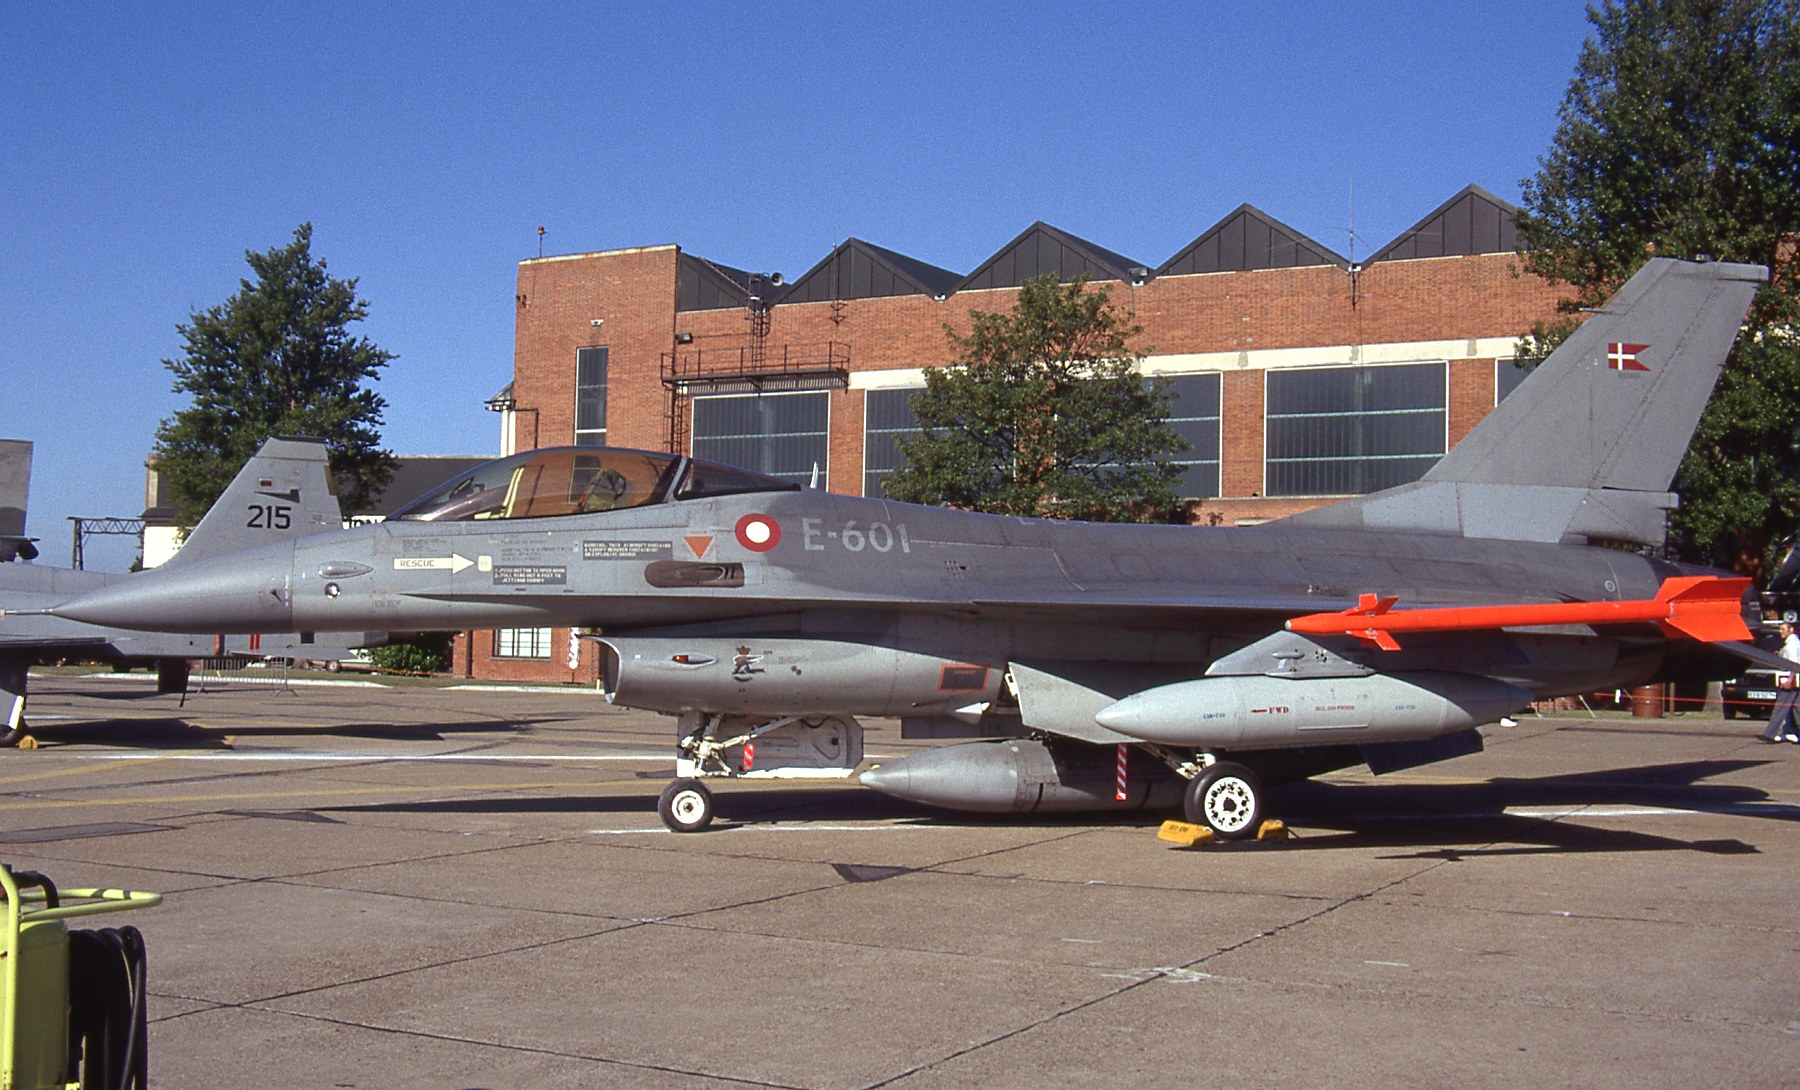 E-601/E601 RDAF - Royal Danish Air Force General Dynamics F-16 Fighting Falcon Airframe Information - AVSpotters.com